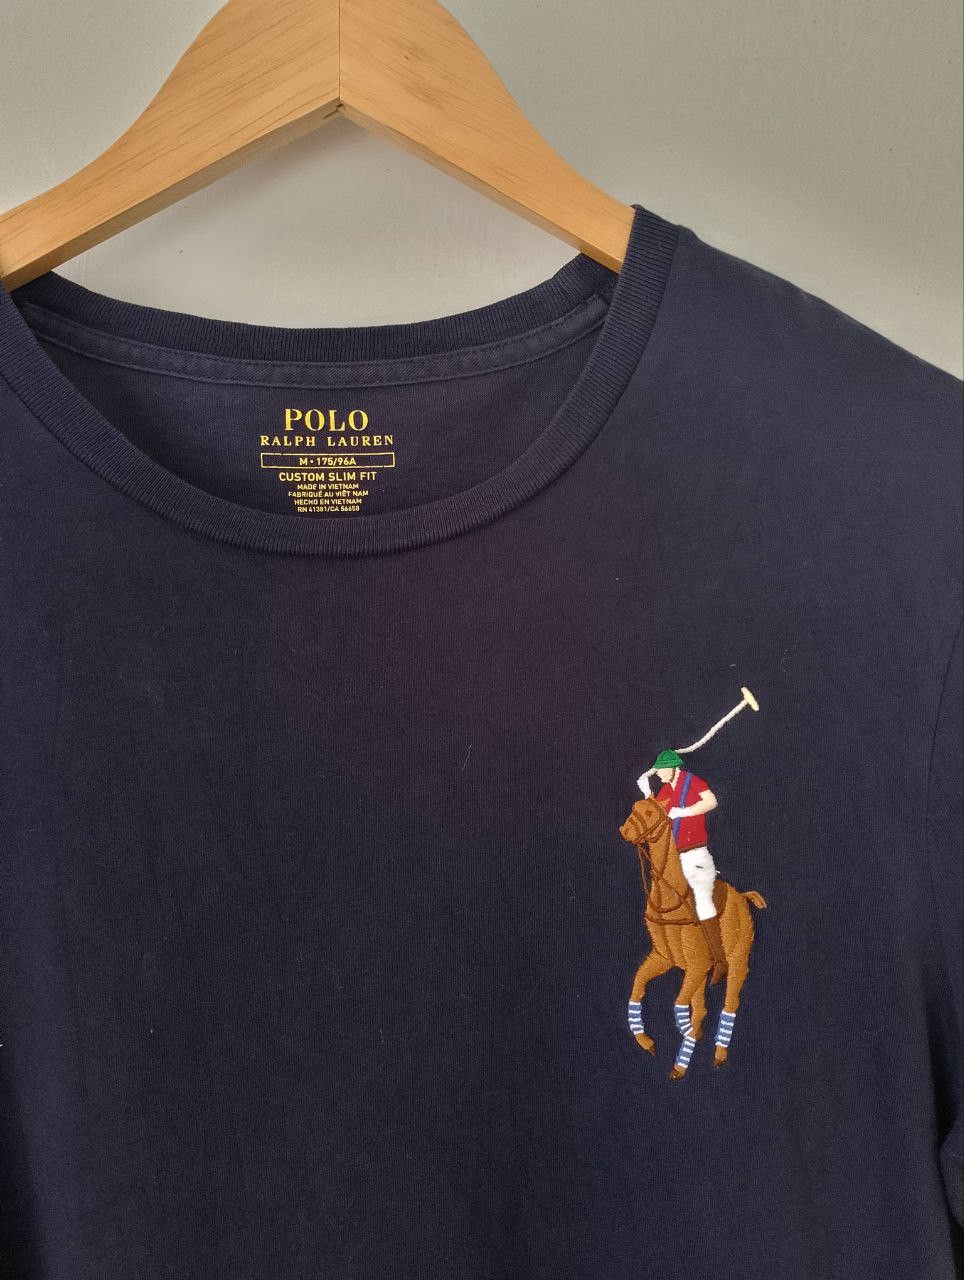 Polo Ralph Lauren Big Pony No 3 Custom Slim Fit Tees - 5